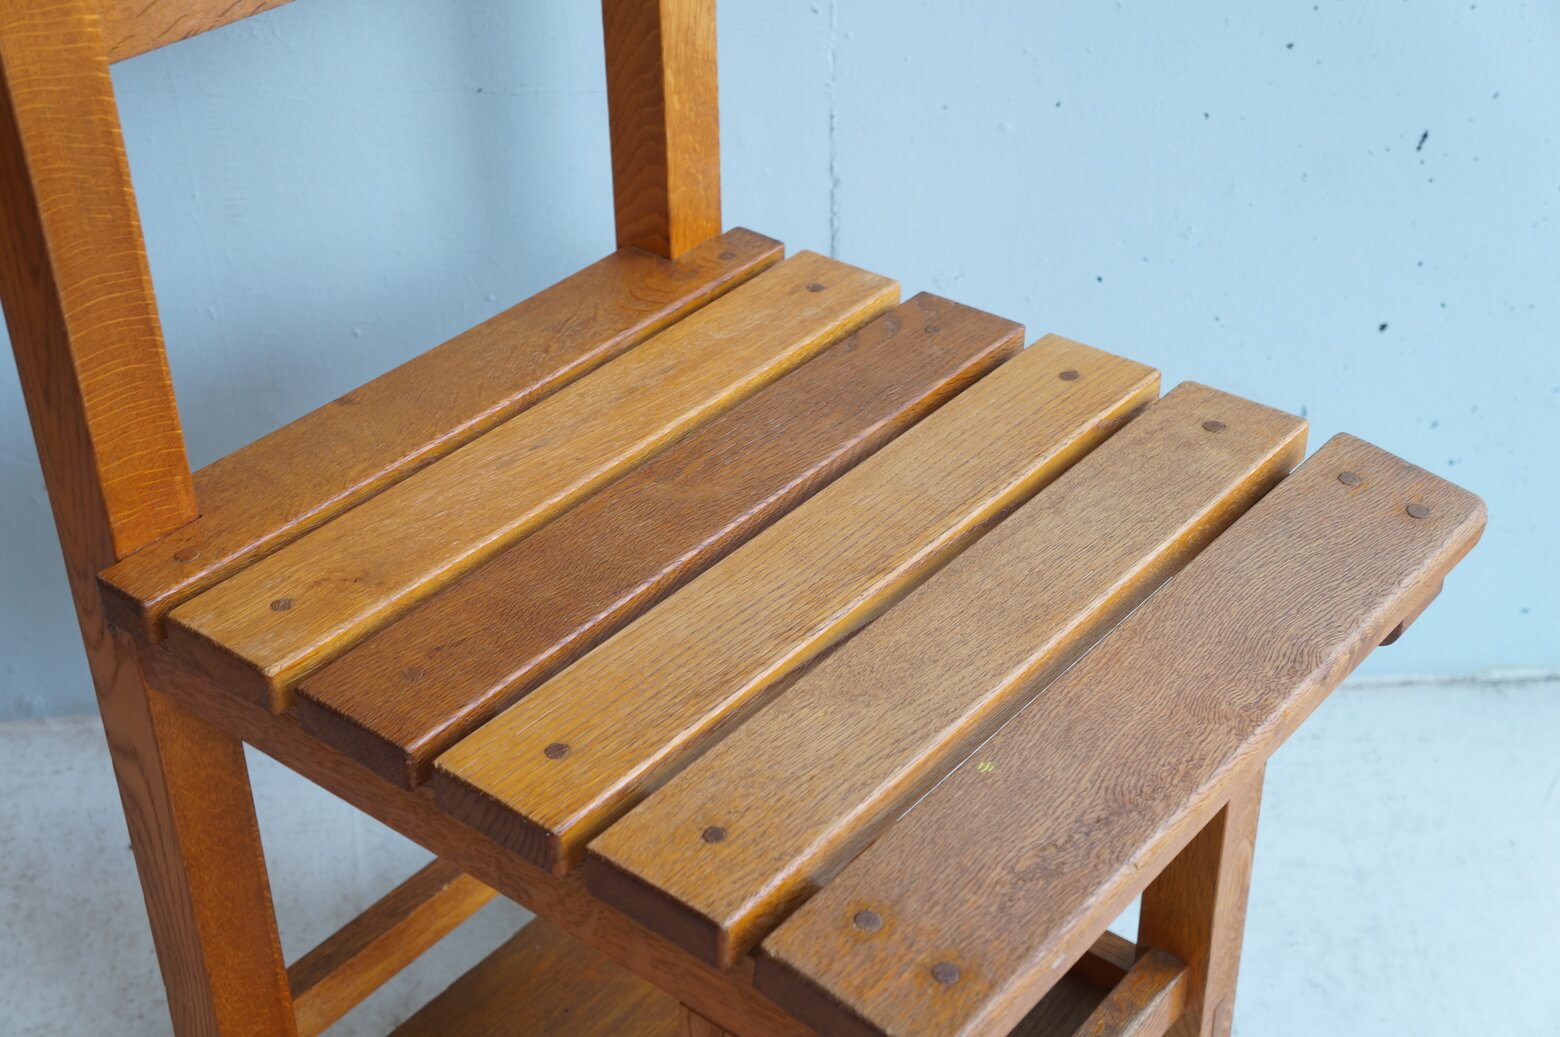 Vintage Wooden School Chair/ヴィンテージ スクールチェア 学校椅子 レトロ 1